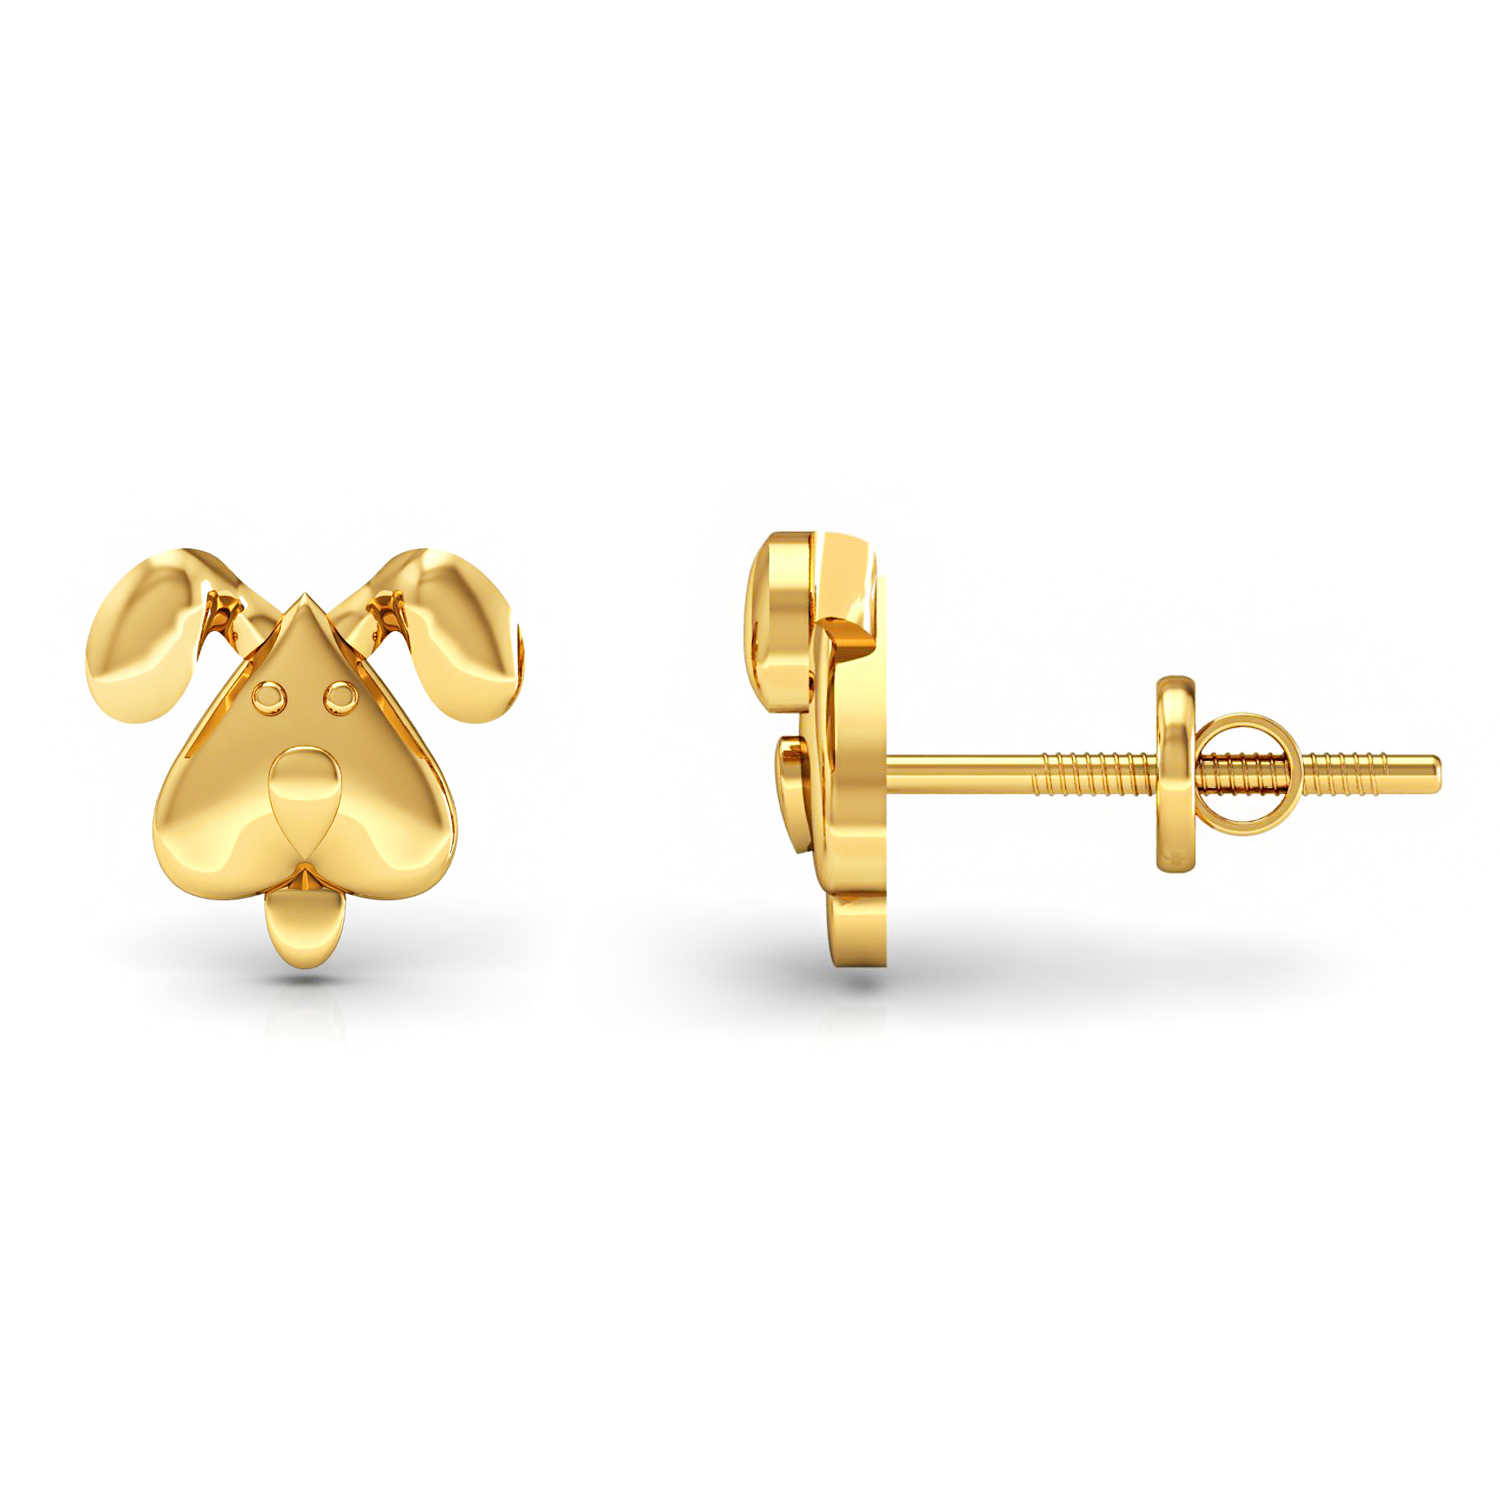 Solid gold dogi shape stud kids earrings